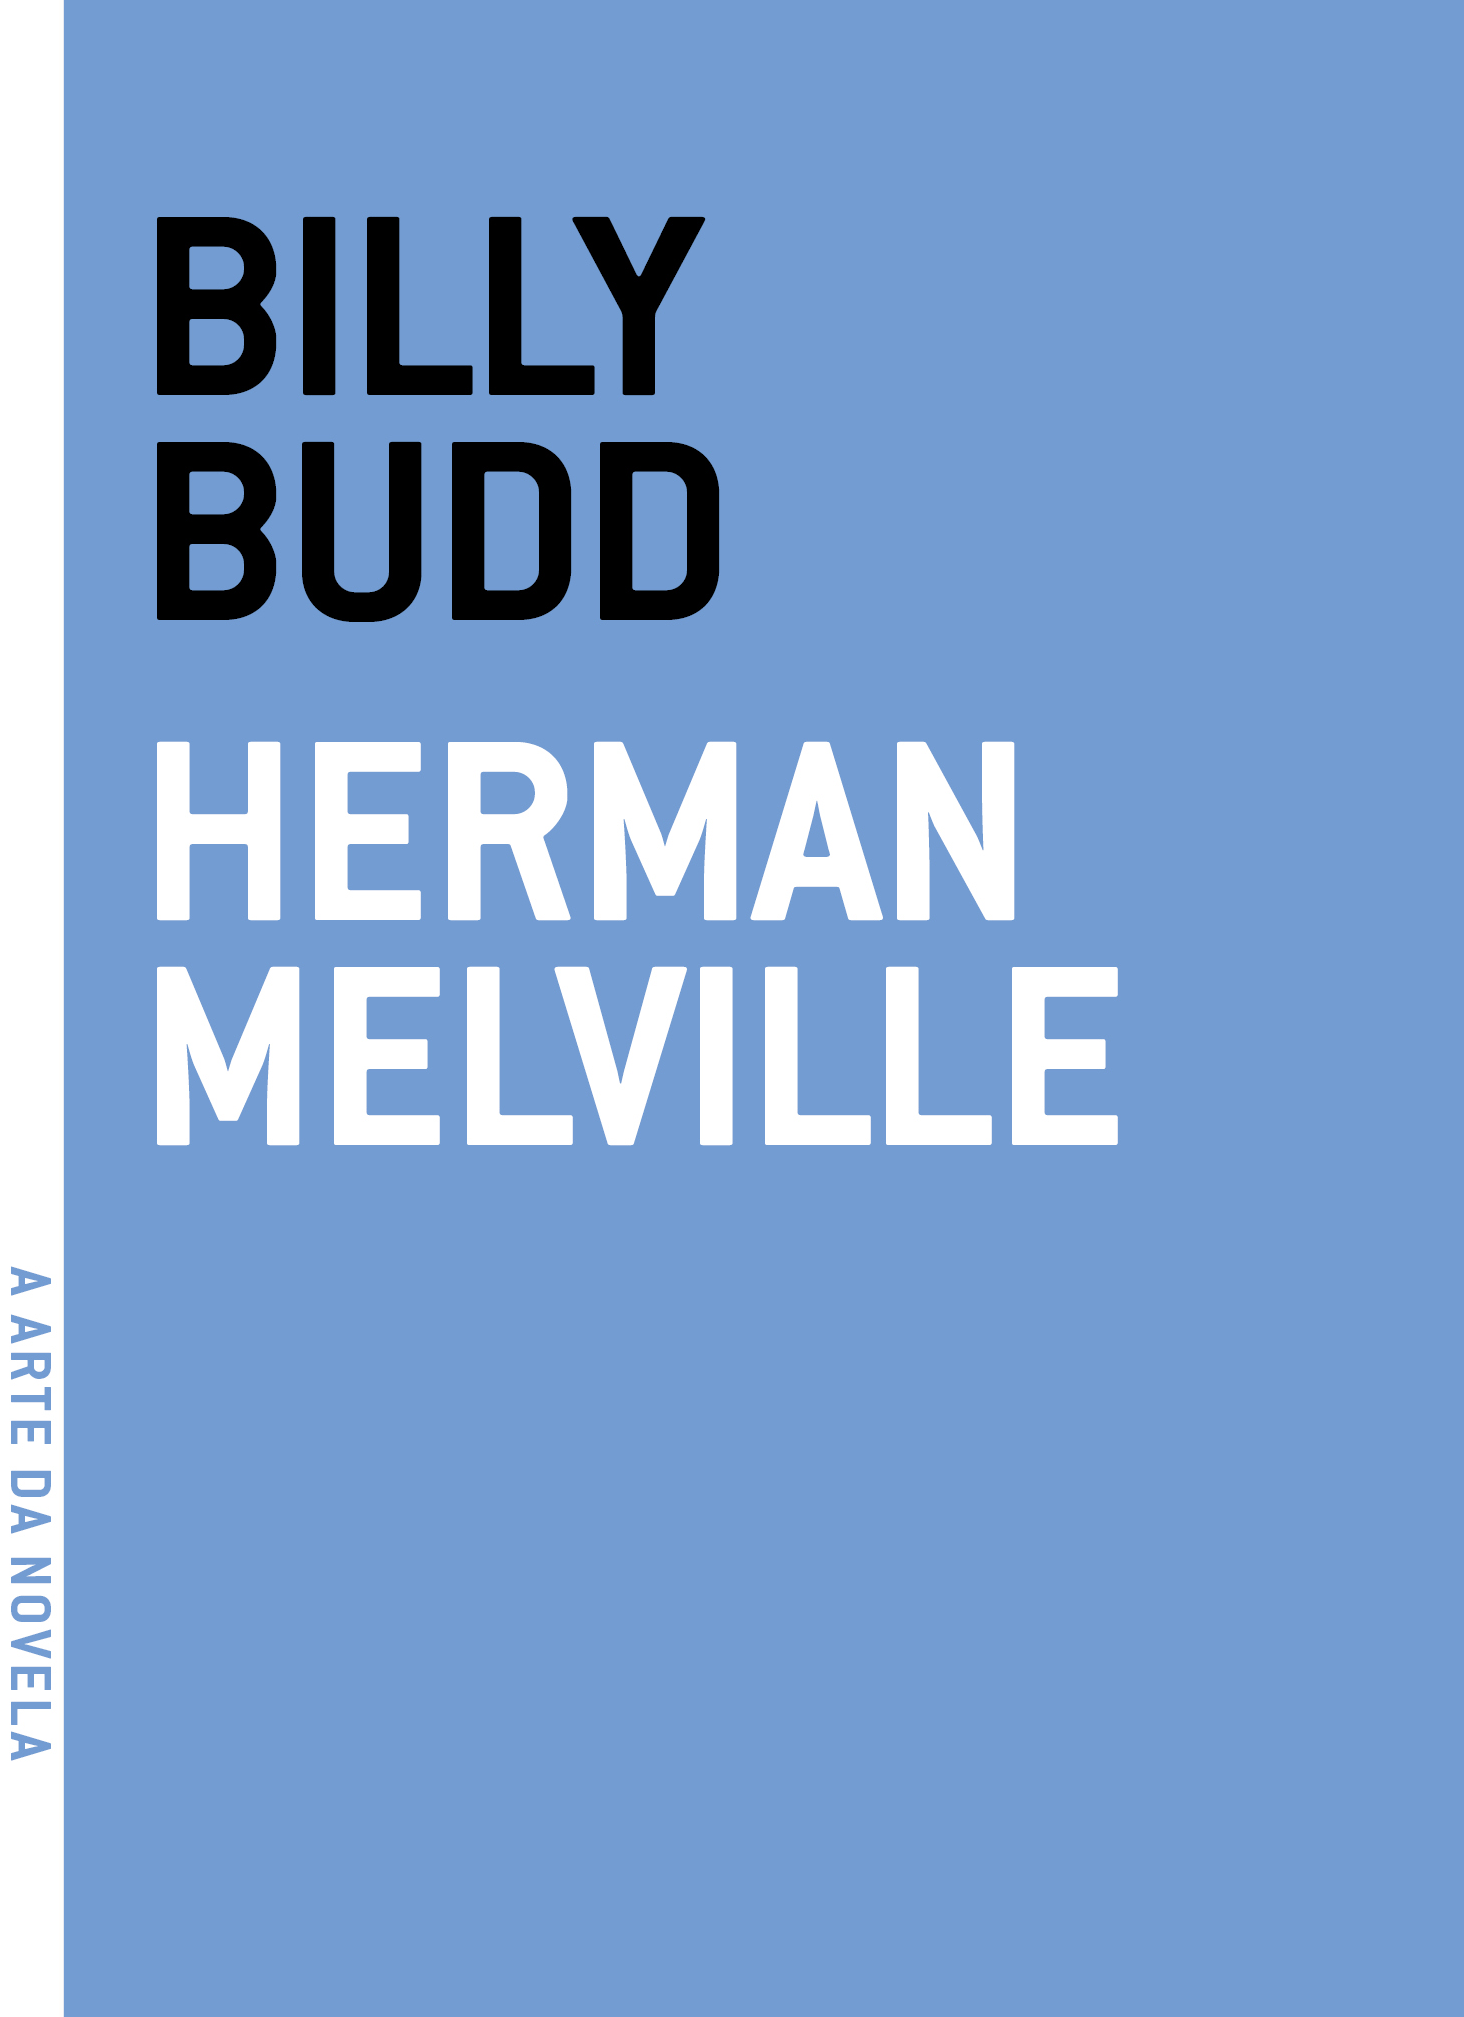 Billy Budd, livro de Herman Melville